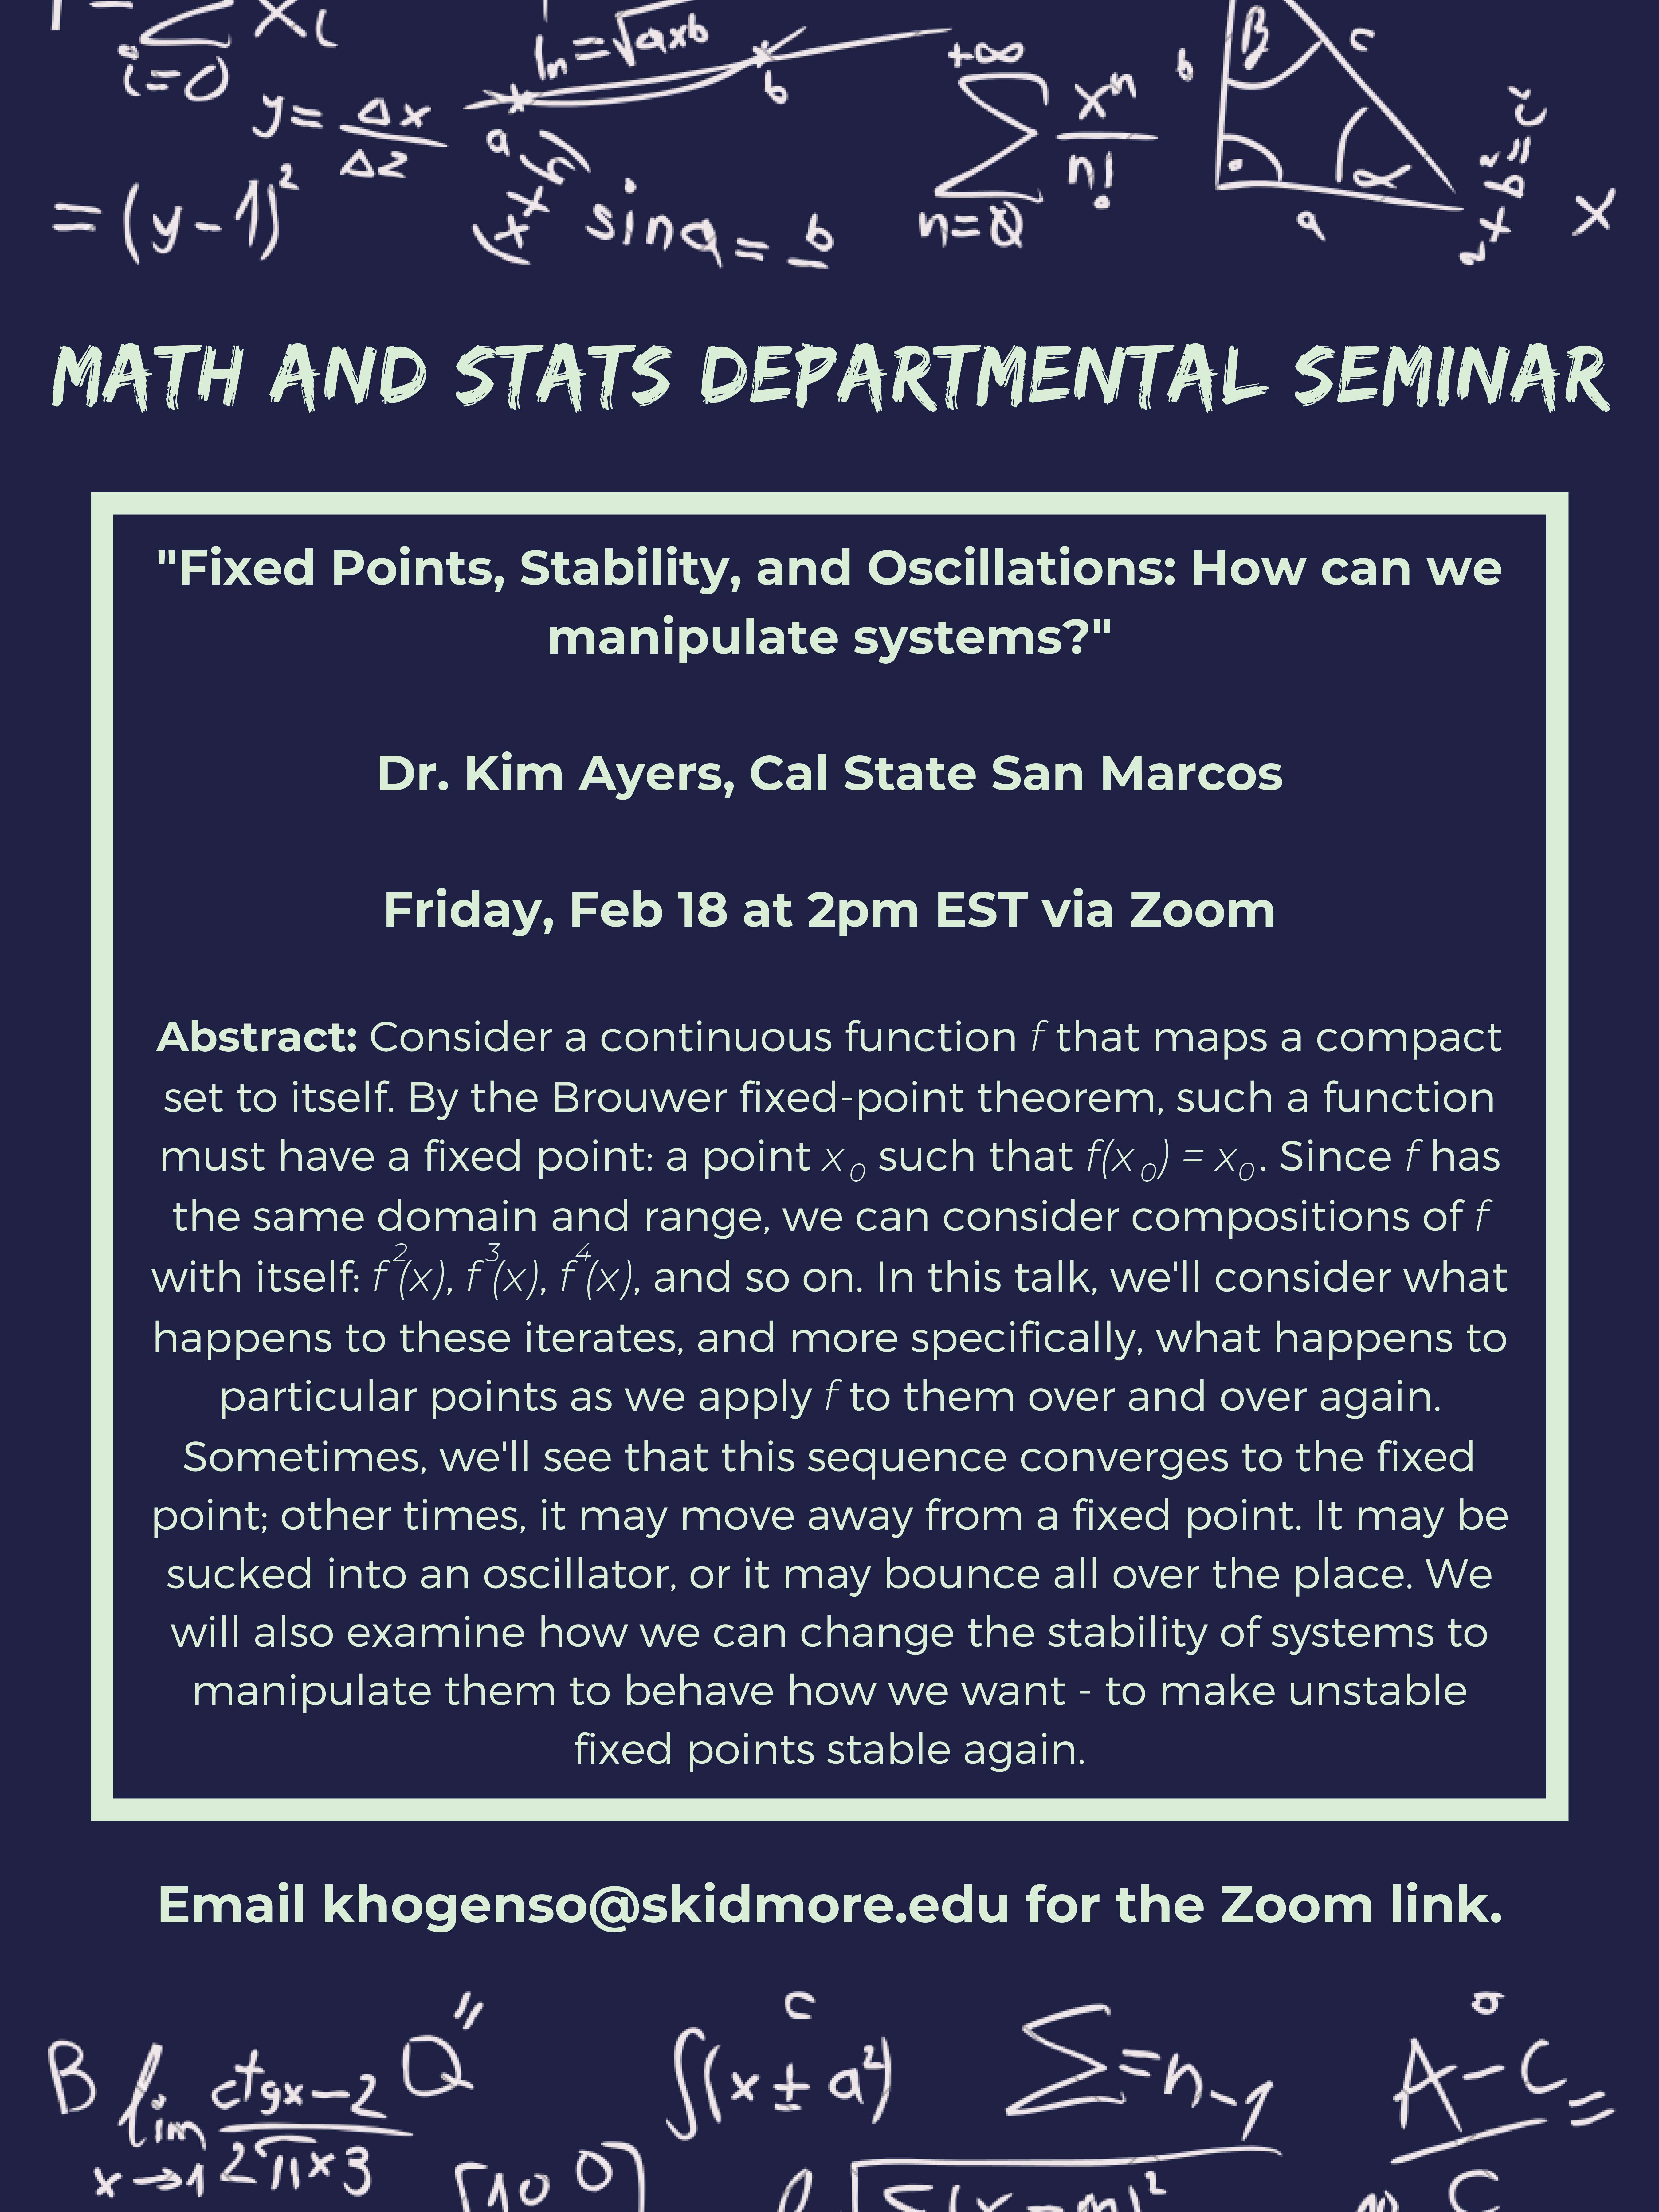 Mathematics Statistics Feb 18 event flyer